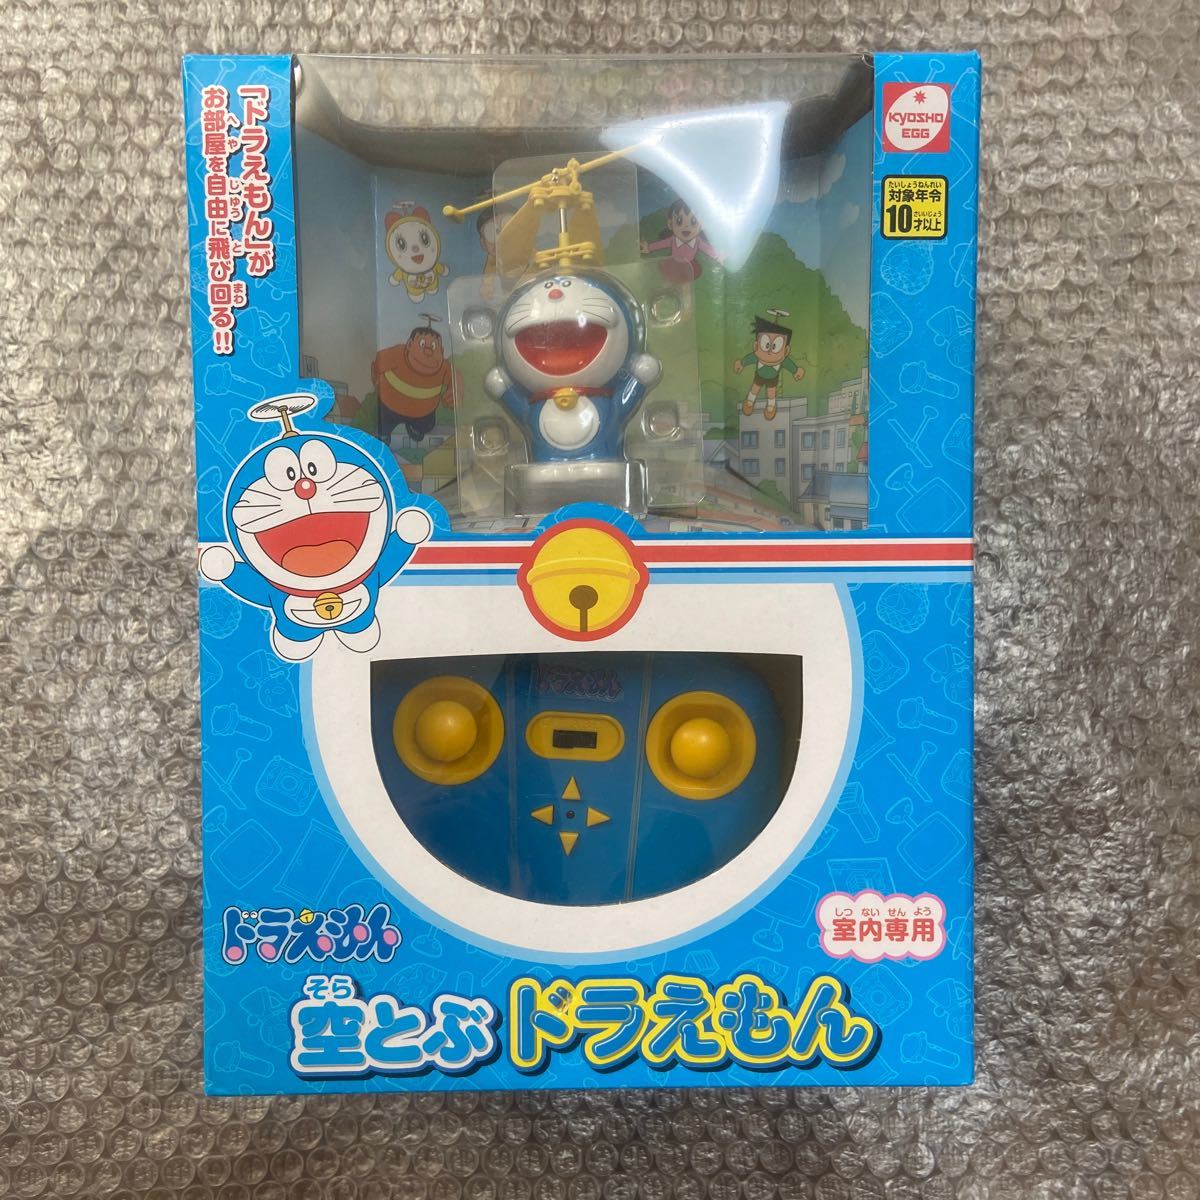 New Sky Tobu Doraemon Radio Concon Concon Kyosho Drone фигура Bandai Helicopter Gyro -датчик Anpanman Display